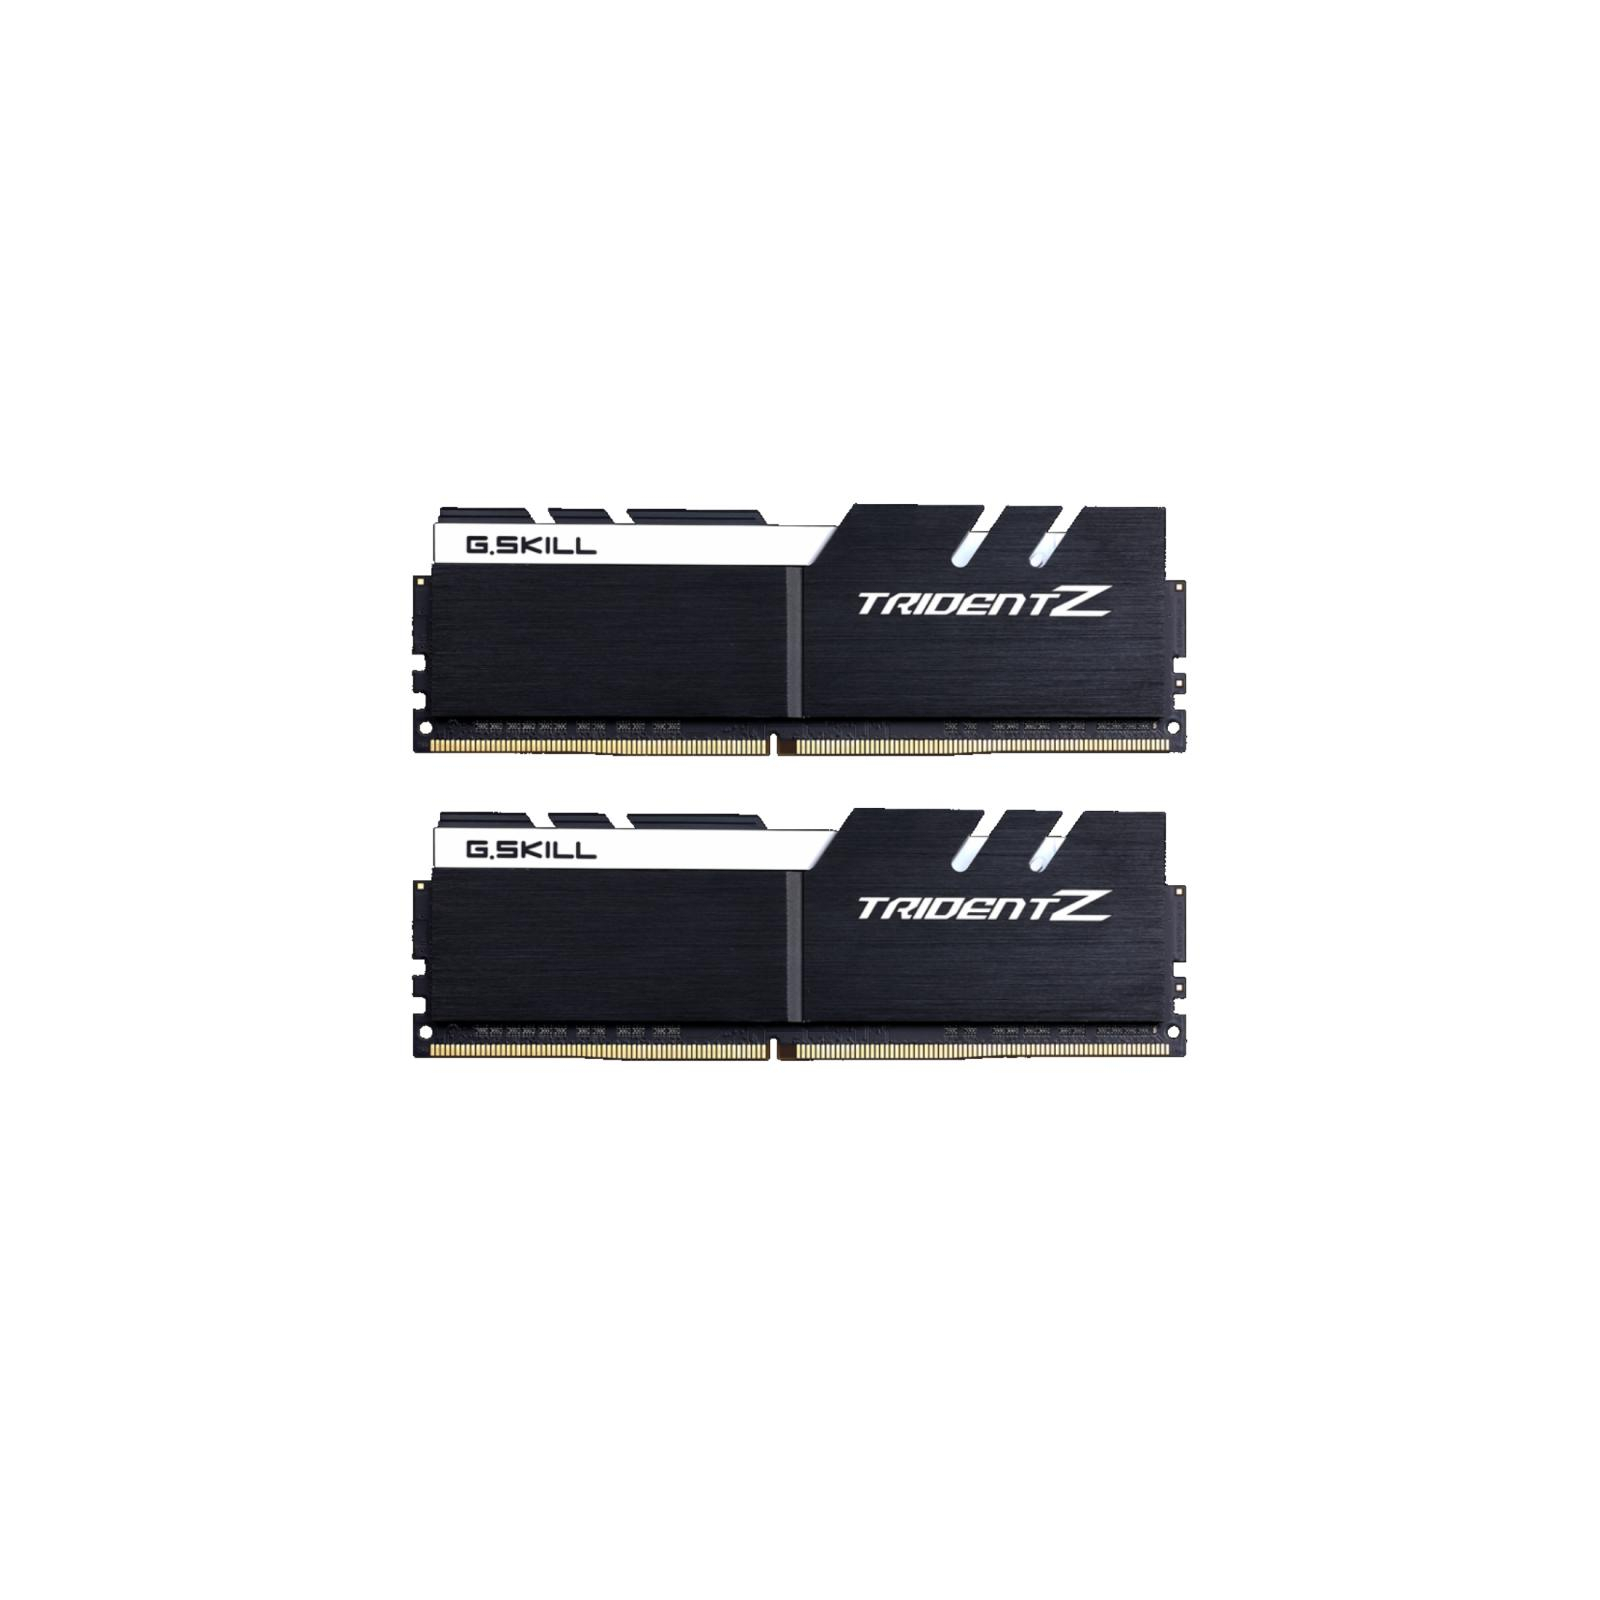 Модуль памяти для компьютера DDR4 16GB (2x8GB) 3600 MHz Trident Z Black G.Skill (F4-3600C17D-16GTZKW)